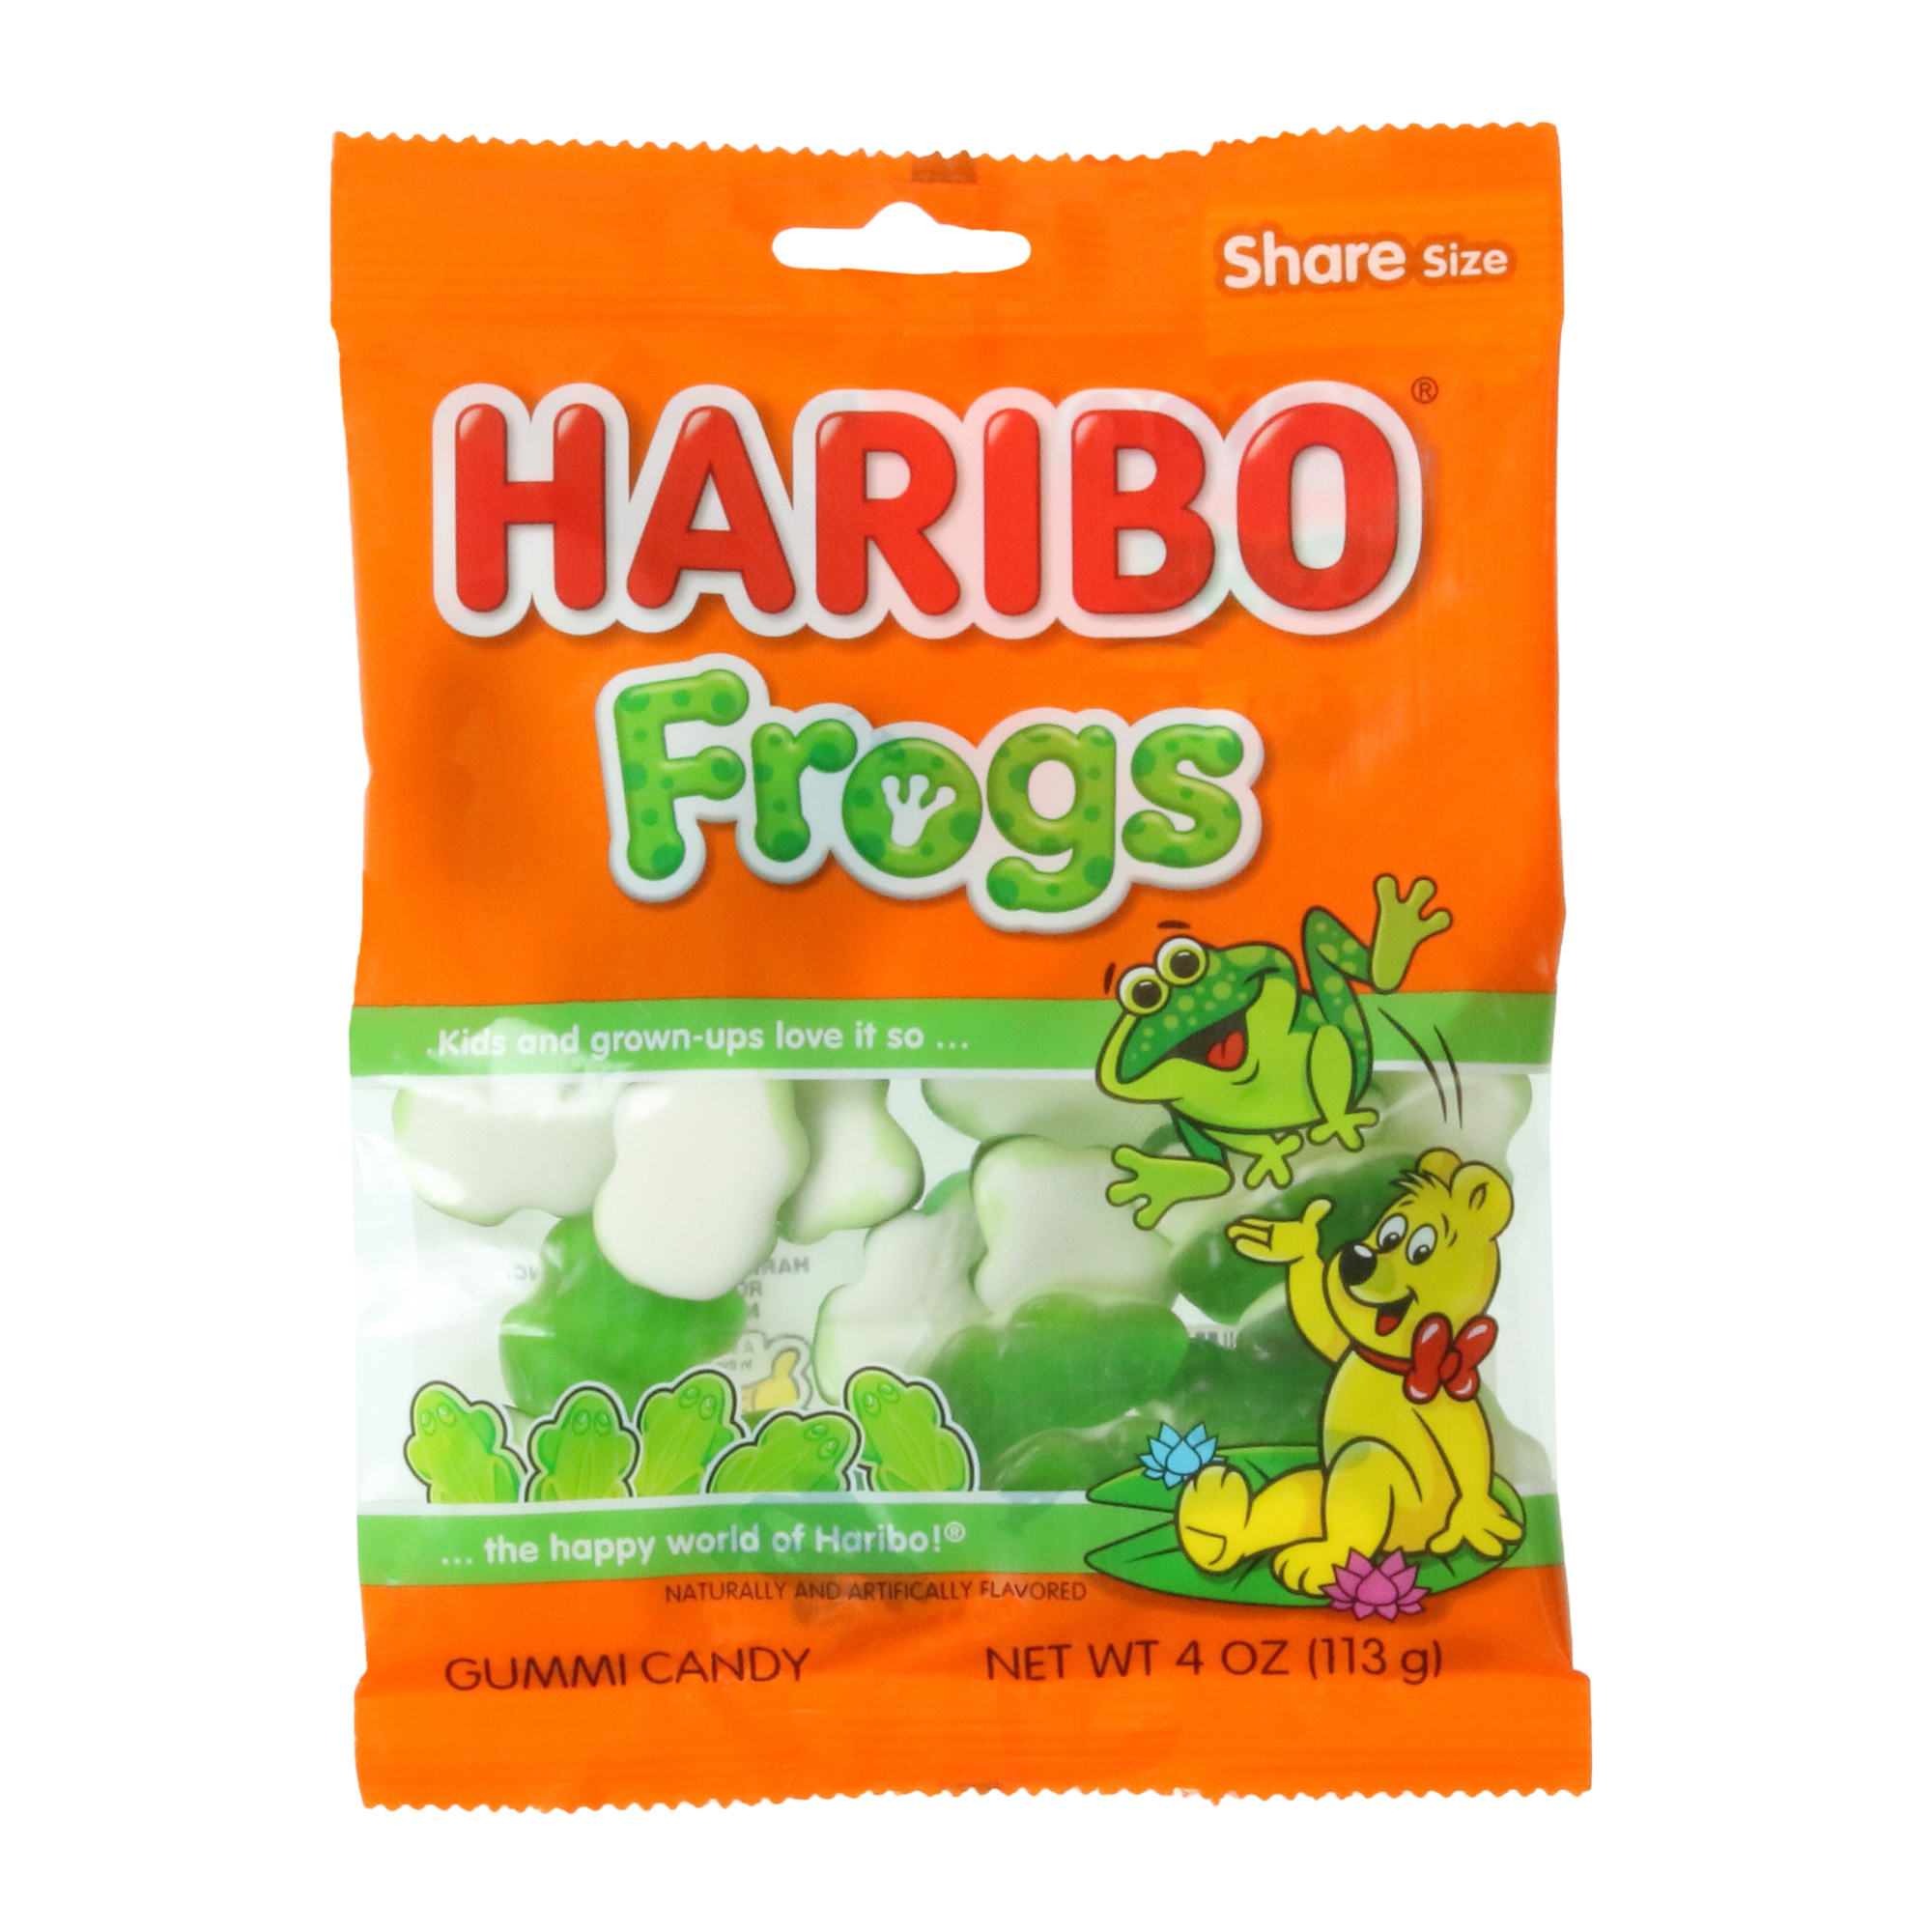 Haribo Frogs Gummi Candy 4 oz